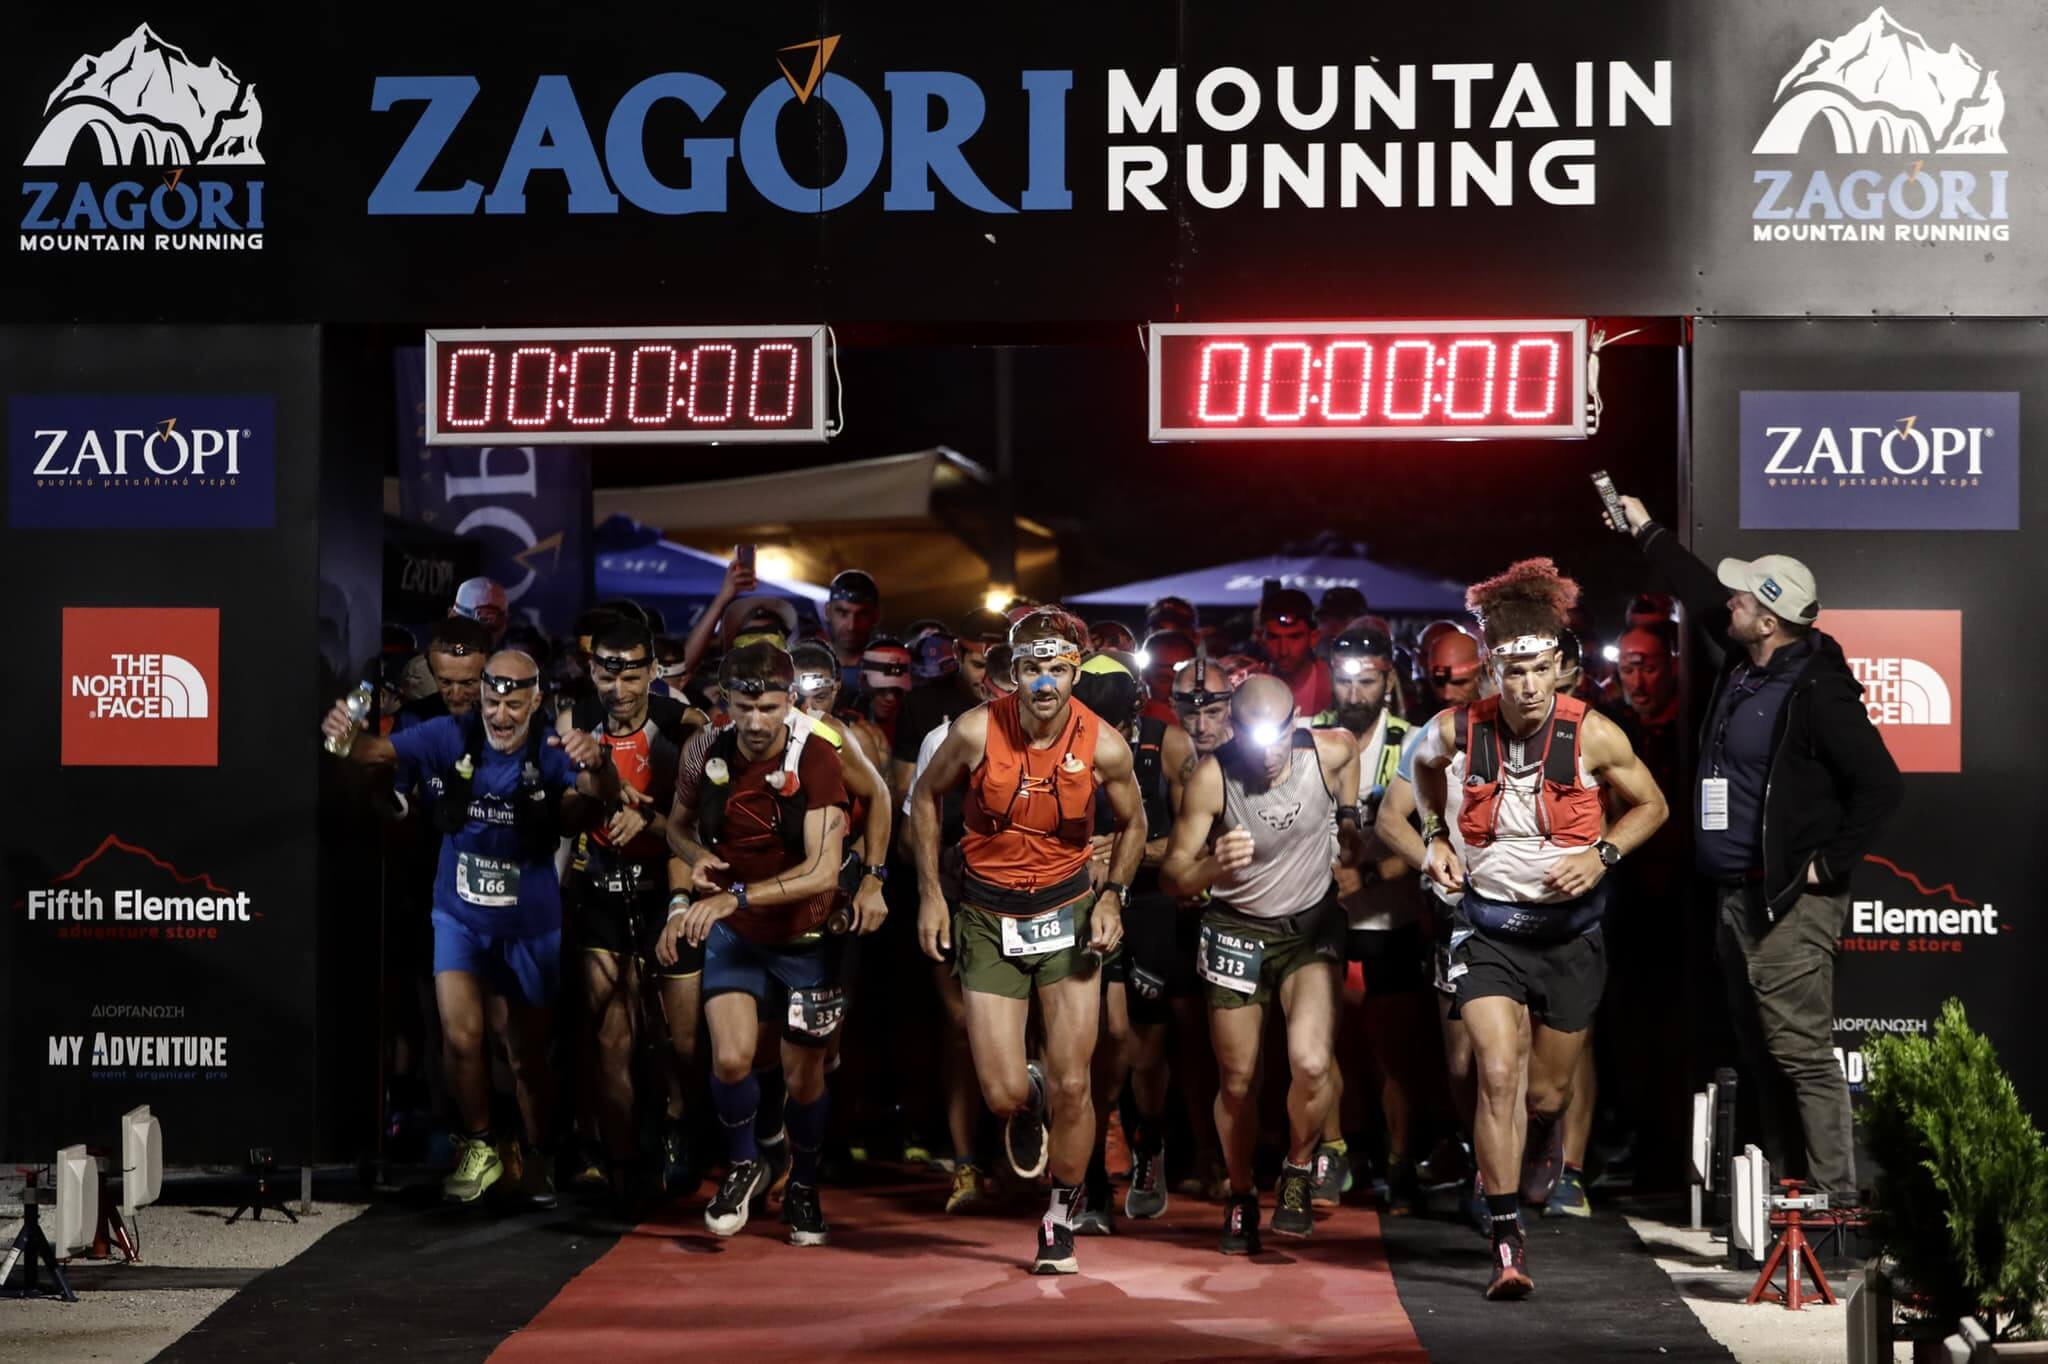 Zagori Mountain Running